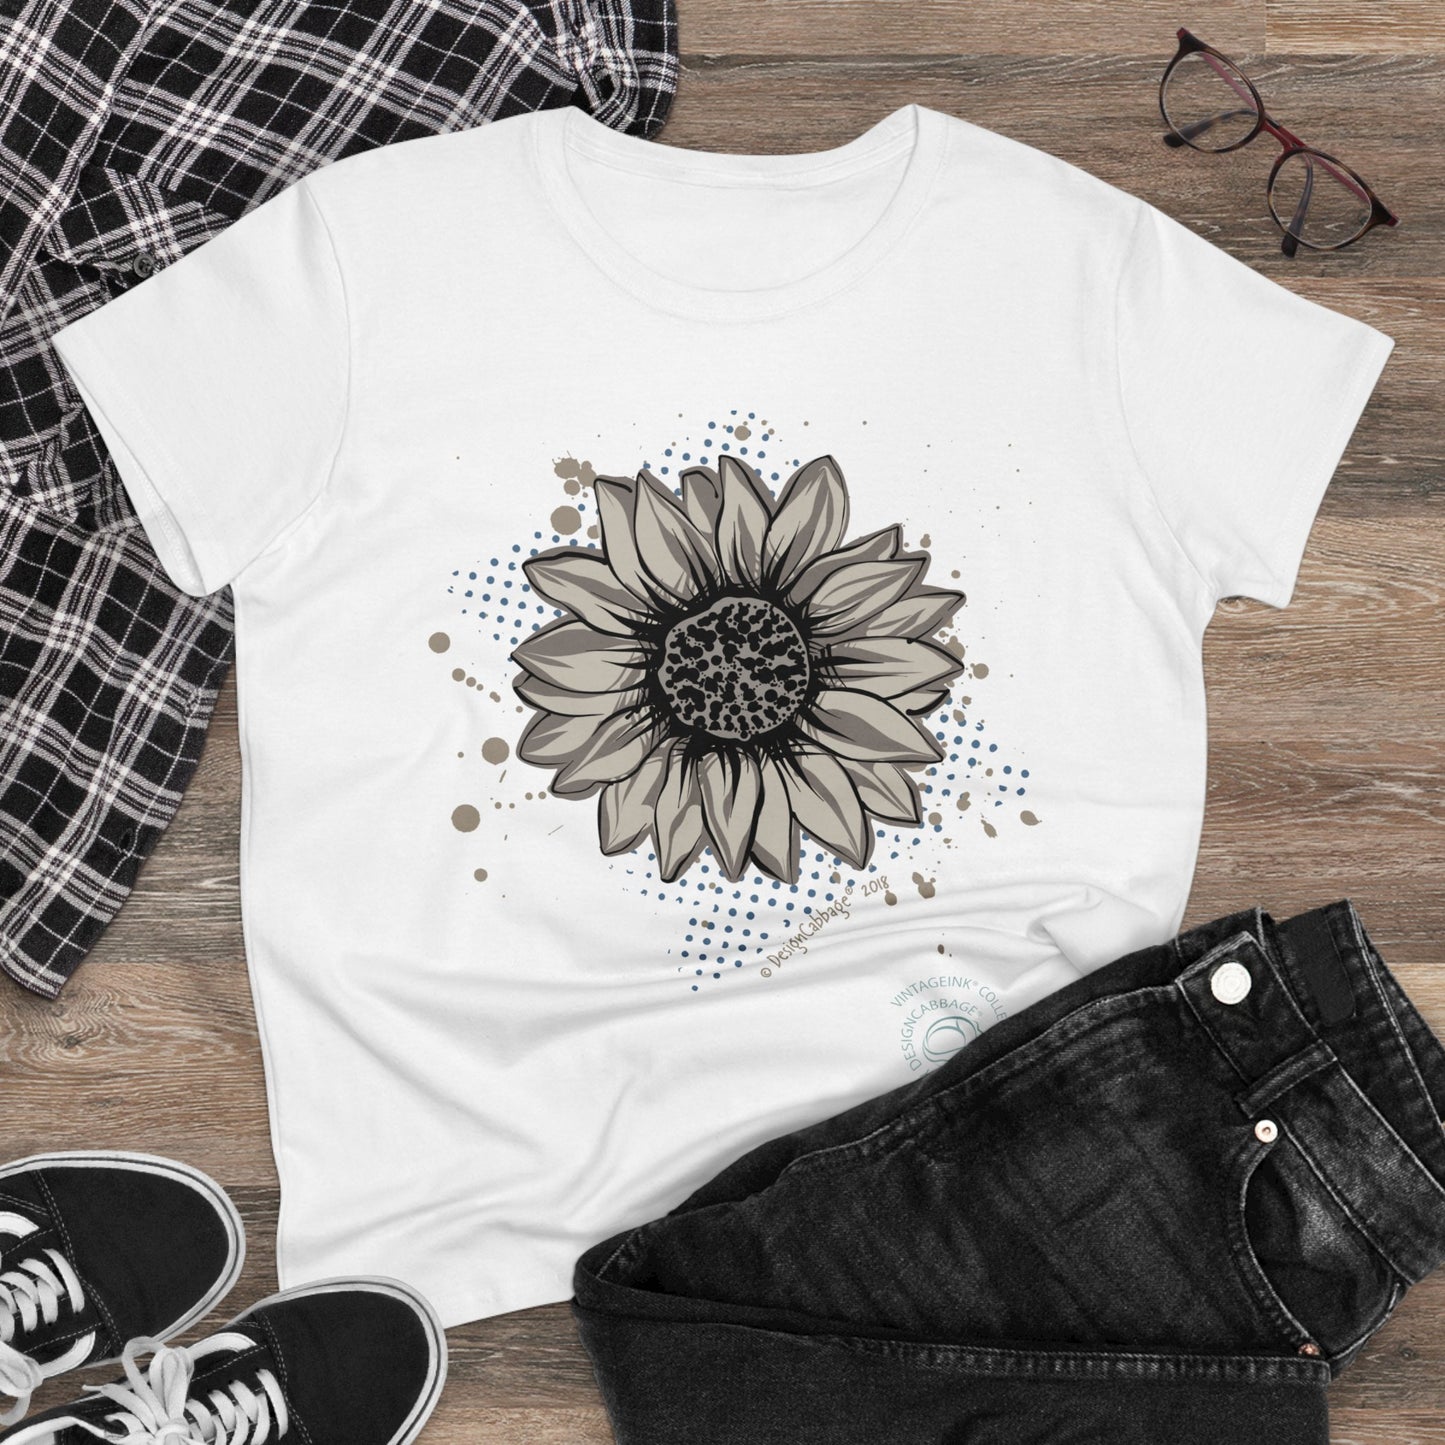 Sunflower Graphic T-Shirt - VintageInk® Collection - Women's Tee